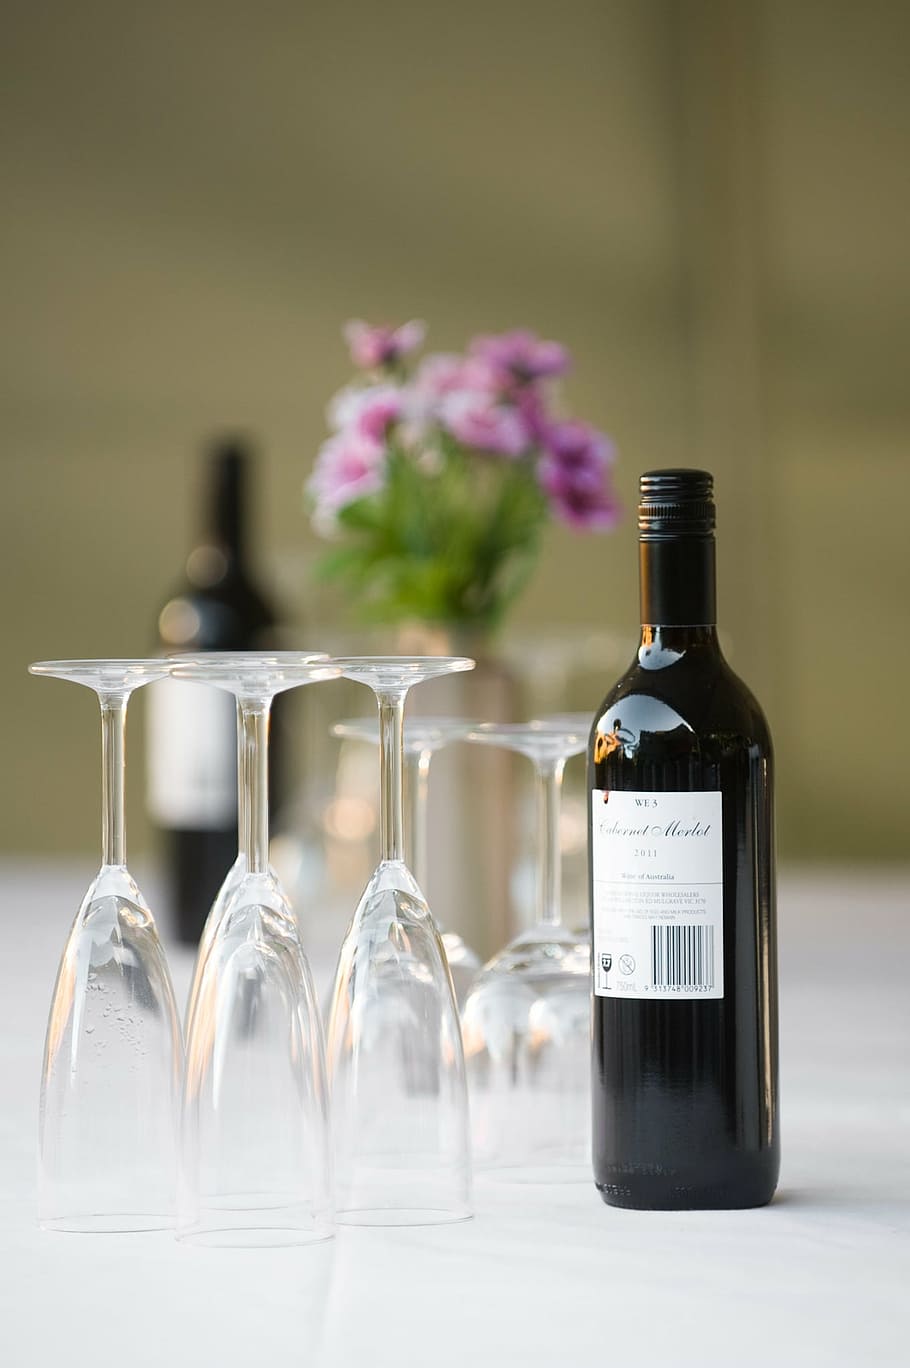 HD wallpaper: selective focus photograph of wine bottle